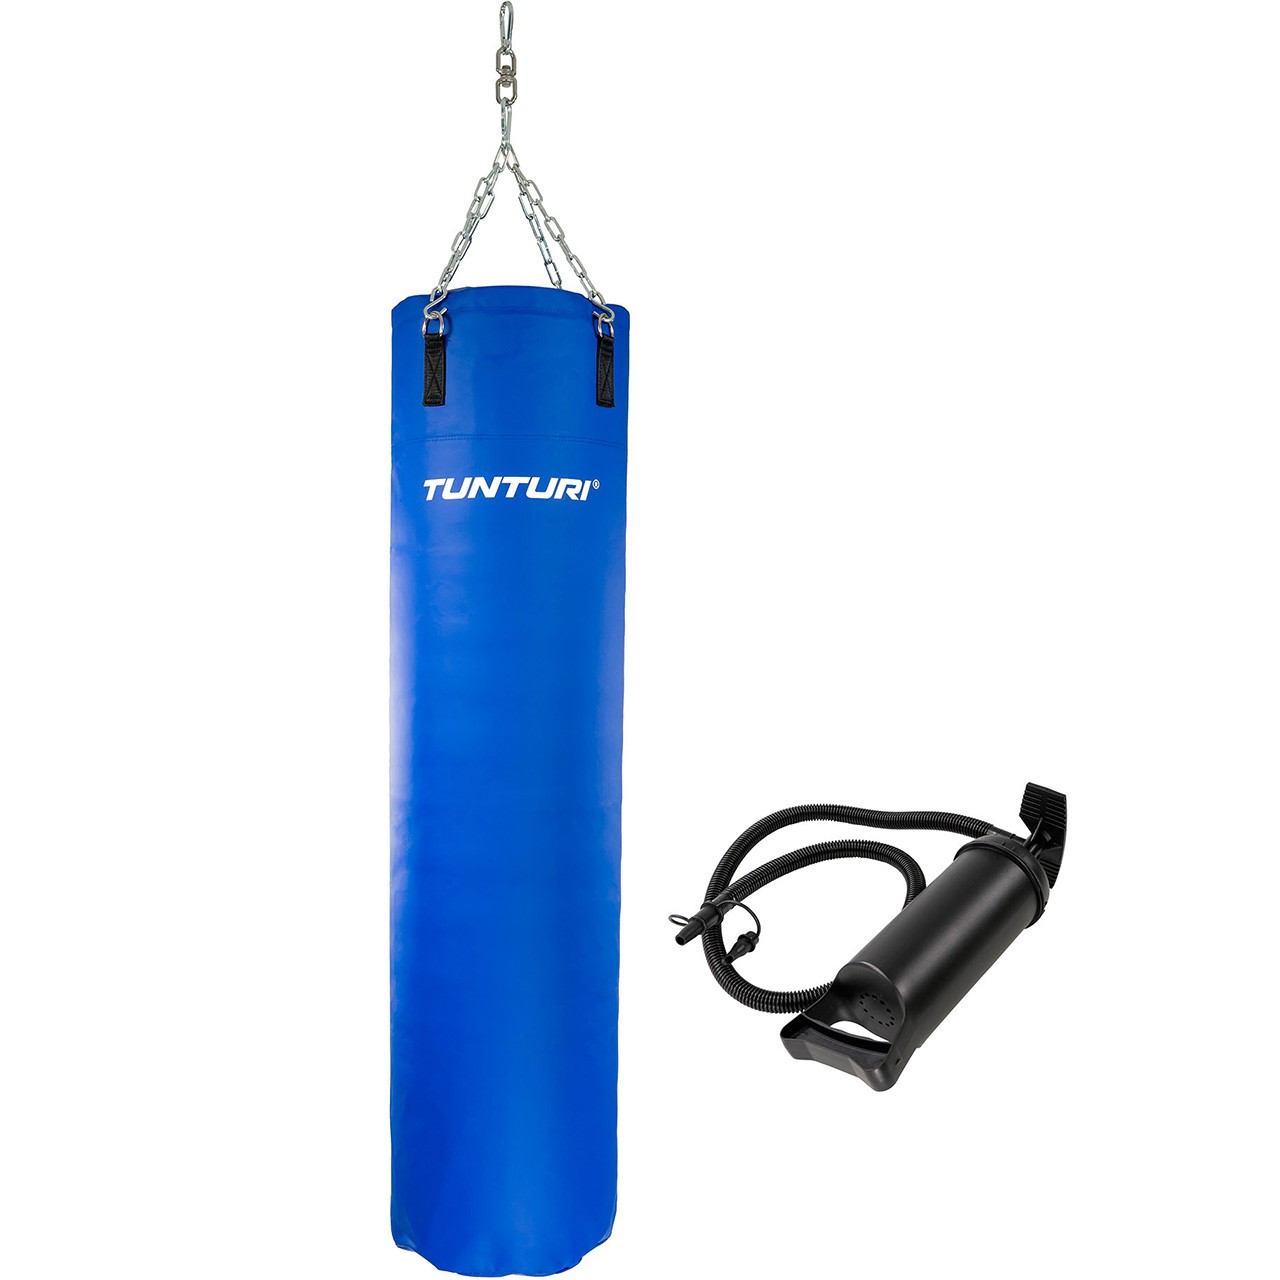 Tunturi Water Boxing Bag 150 cm 50 kg